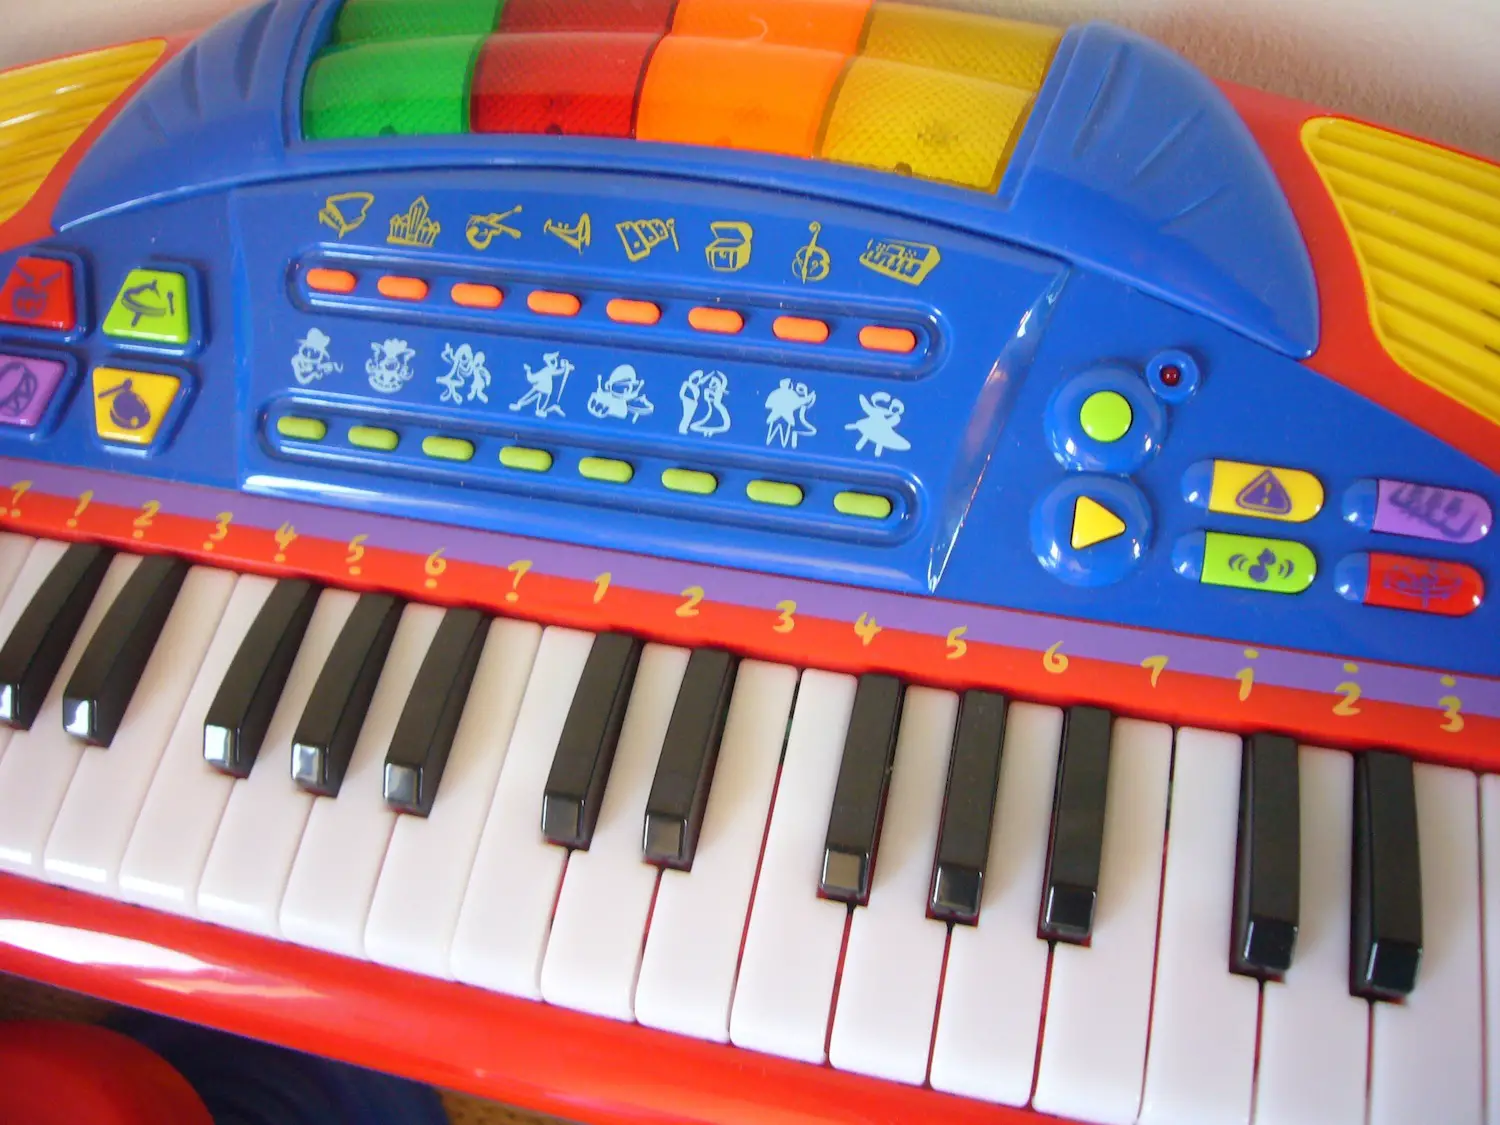 blue-coloured-numbered-keyboard